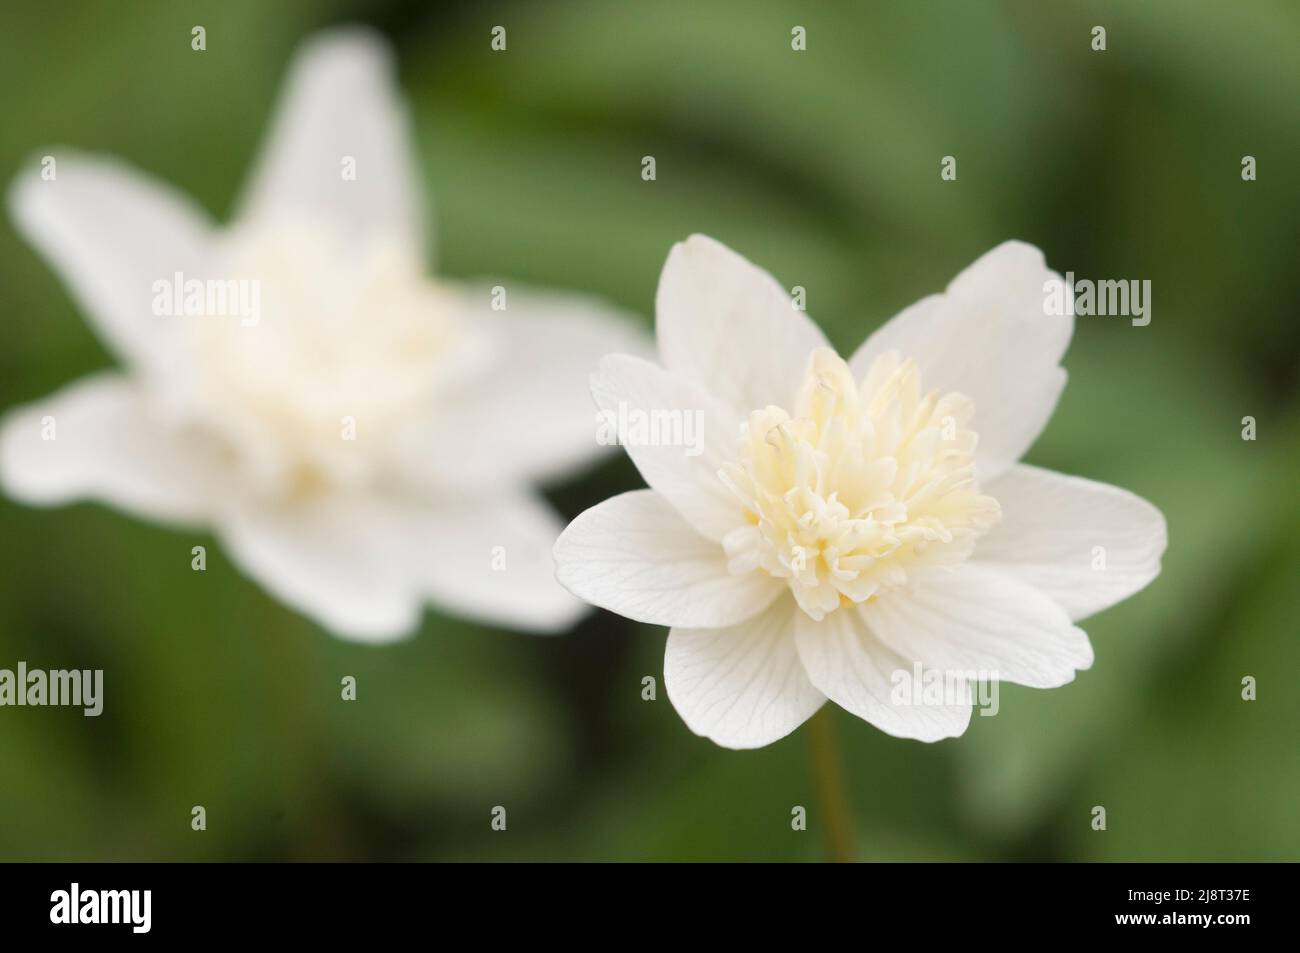 Wood anemone cultivar flowers, close up shot, local focus Stock Photo